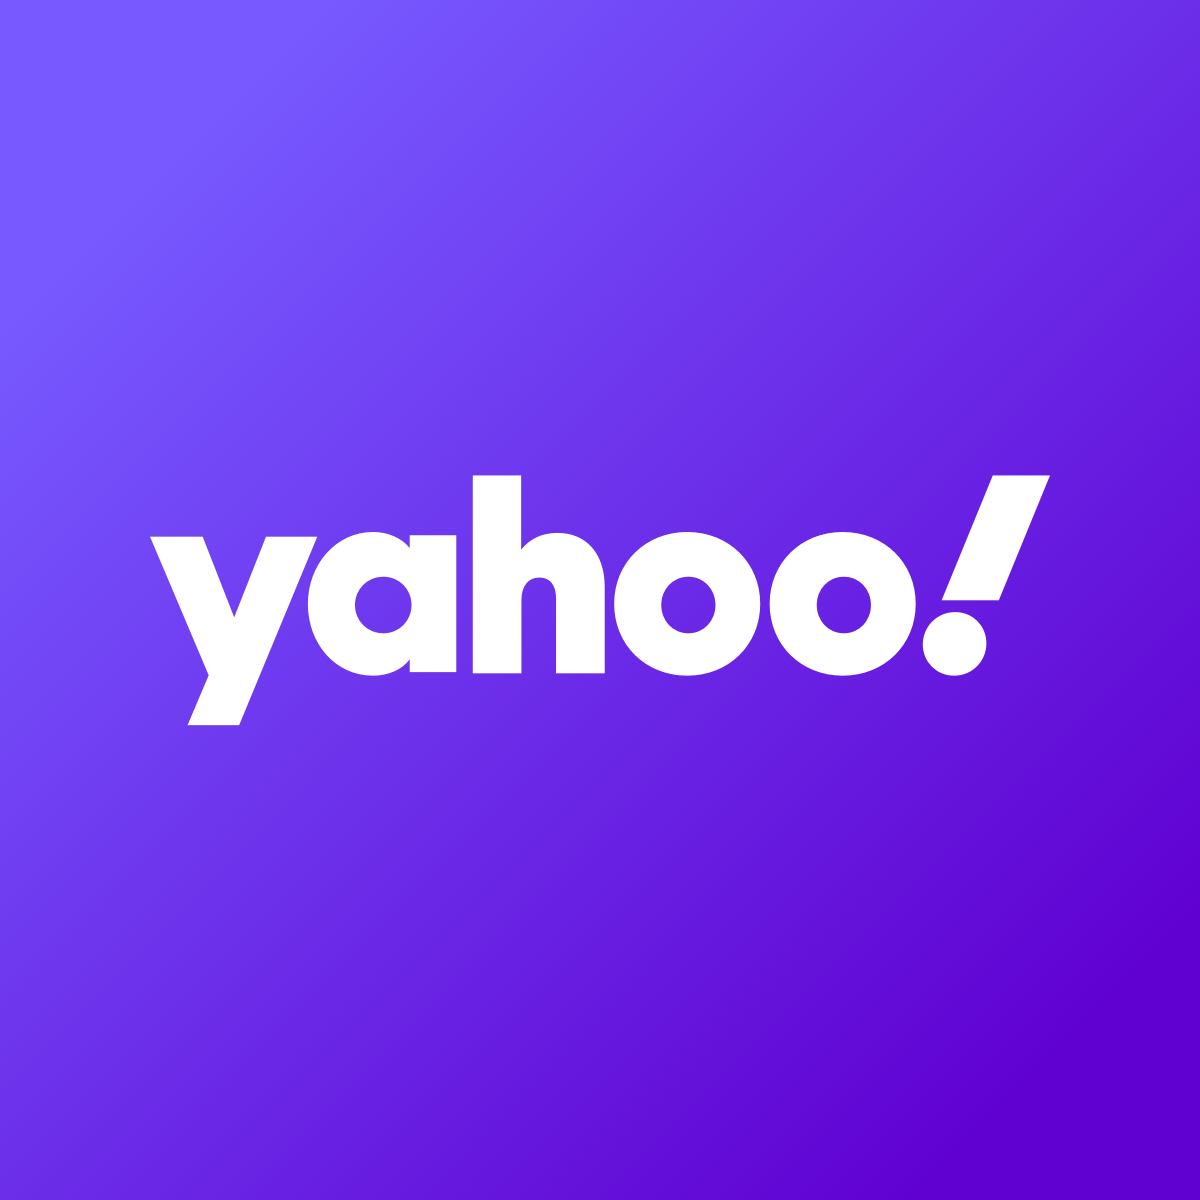 Philip Morris isn't considering withdrawing Swedish Match bid -CEO - Yahoo Finance